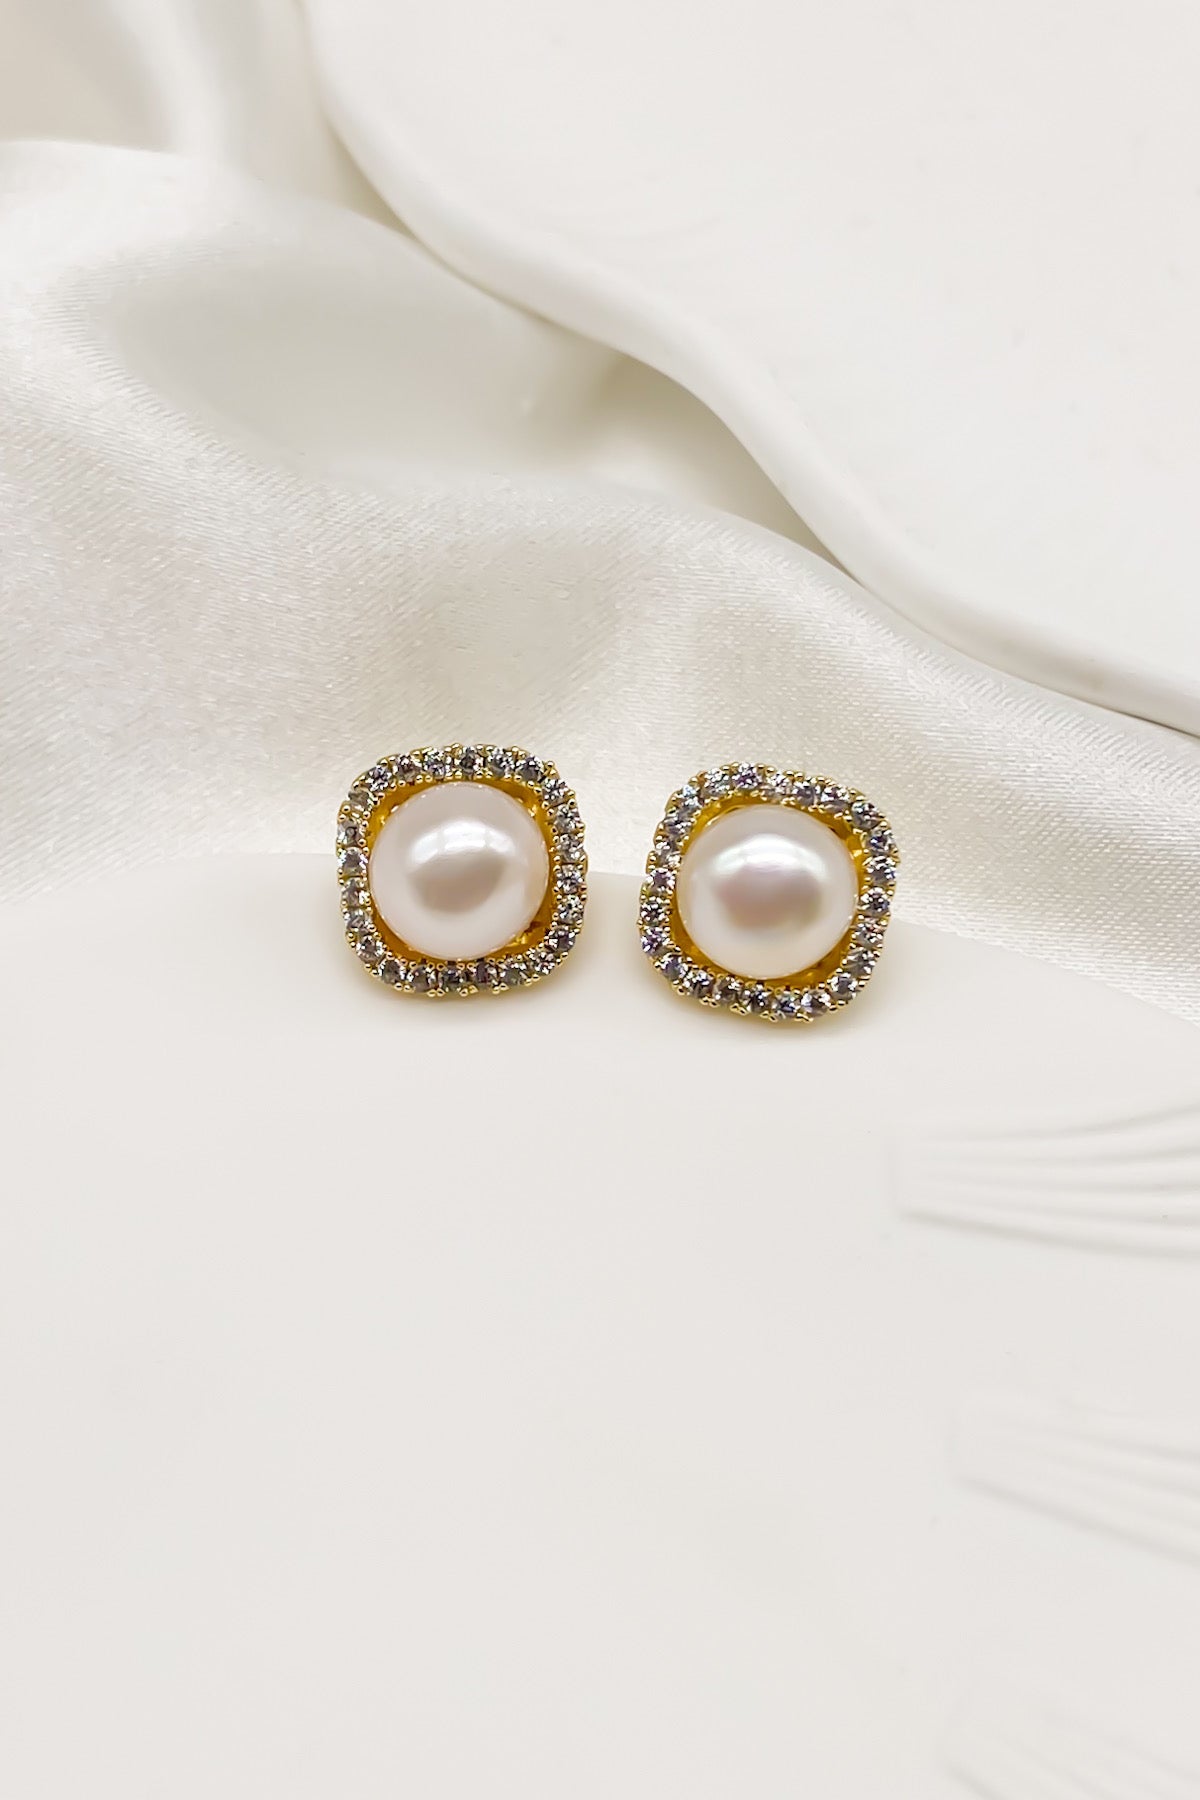 SKYE Shop Chic Modern Elegant Classy Women Jewelry French Parisian Minimalist Alexandra Freshwater Pearl Stud Earrings 3